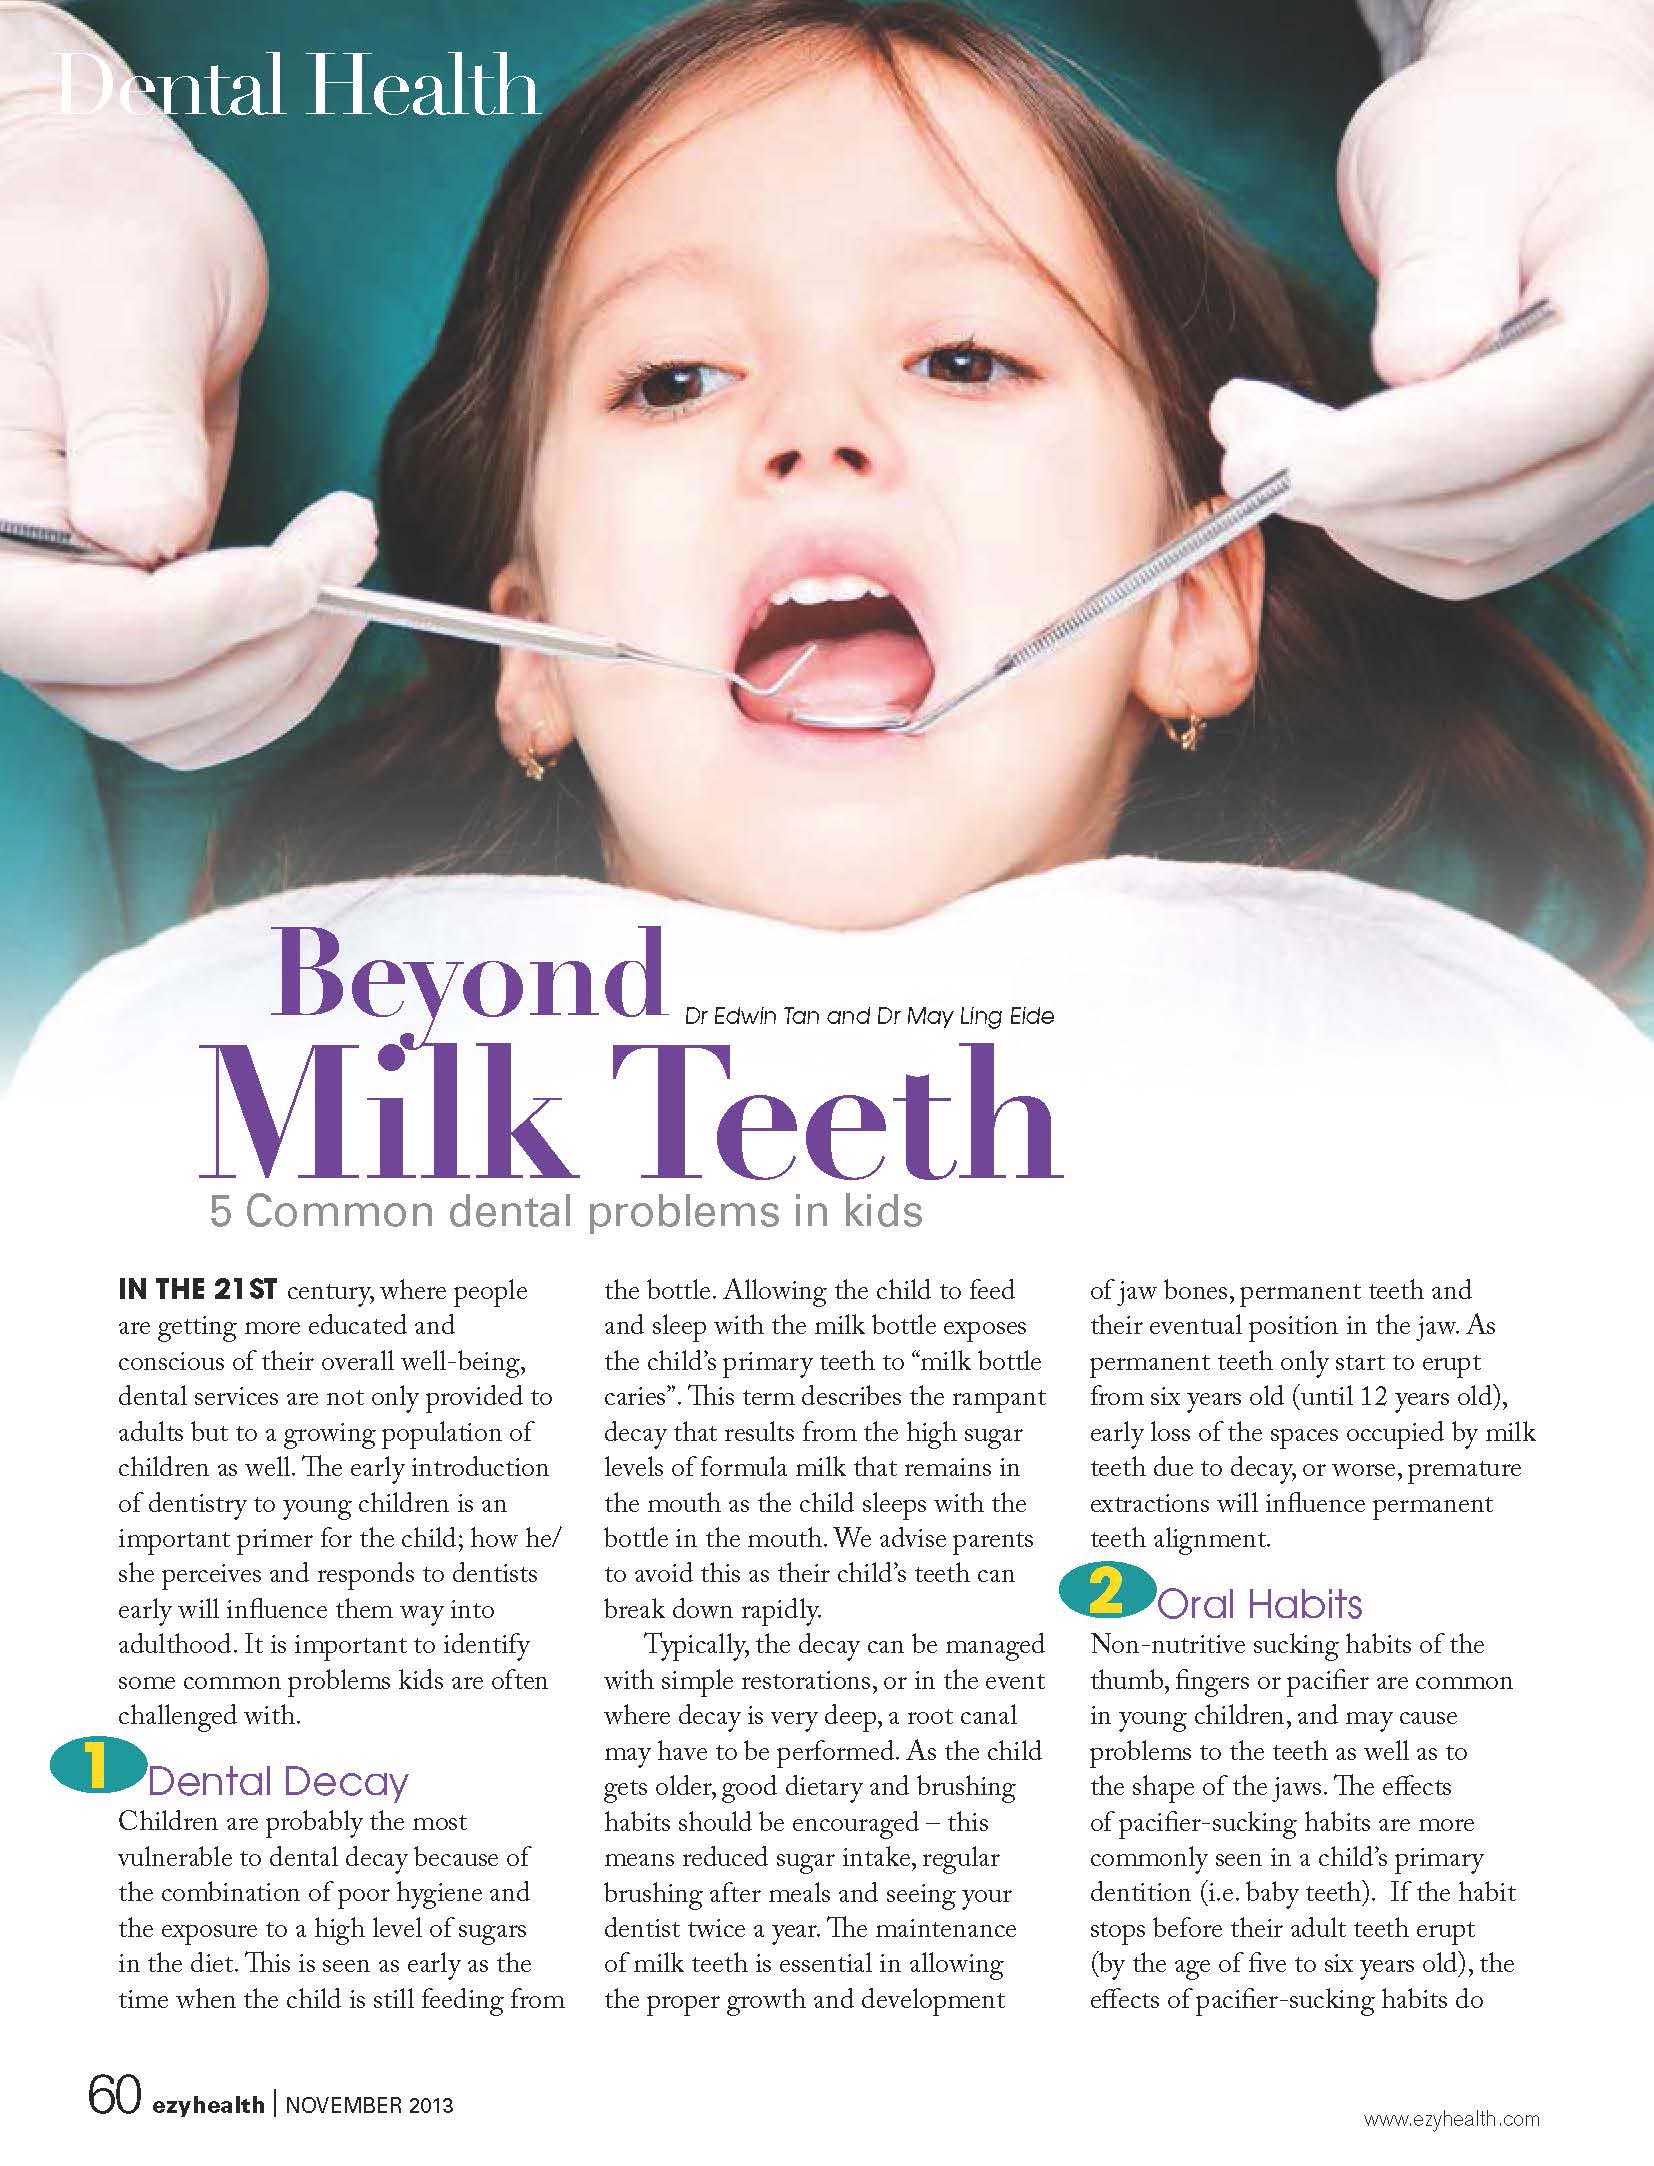 Ezyhealth Magazine, November 2013 issue: “Beyond Milk Teeth – 5 common dental problems in kids”